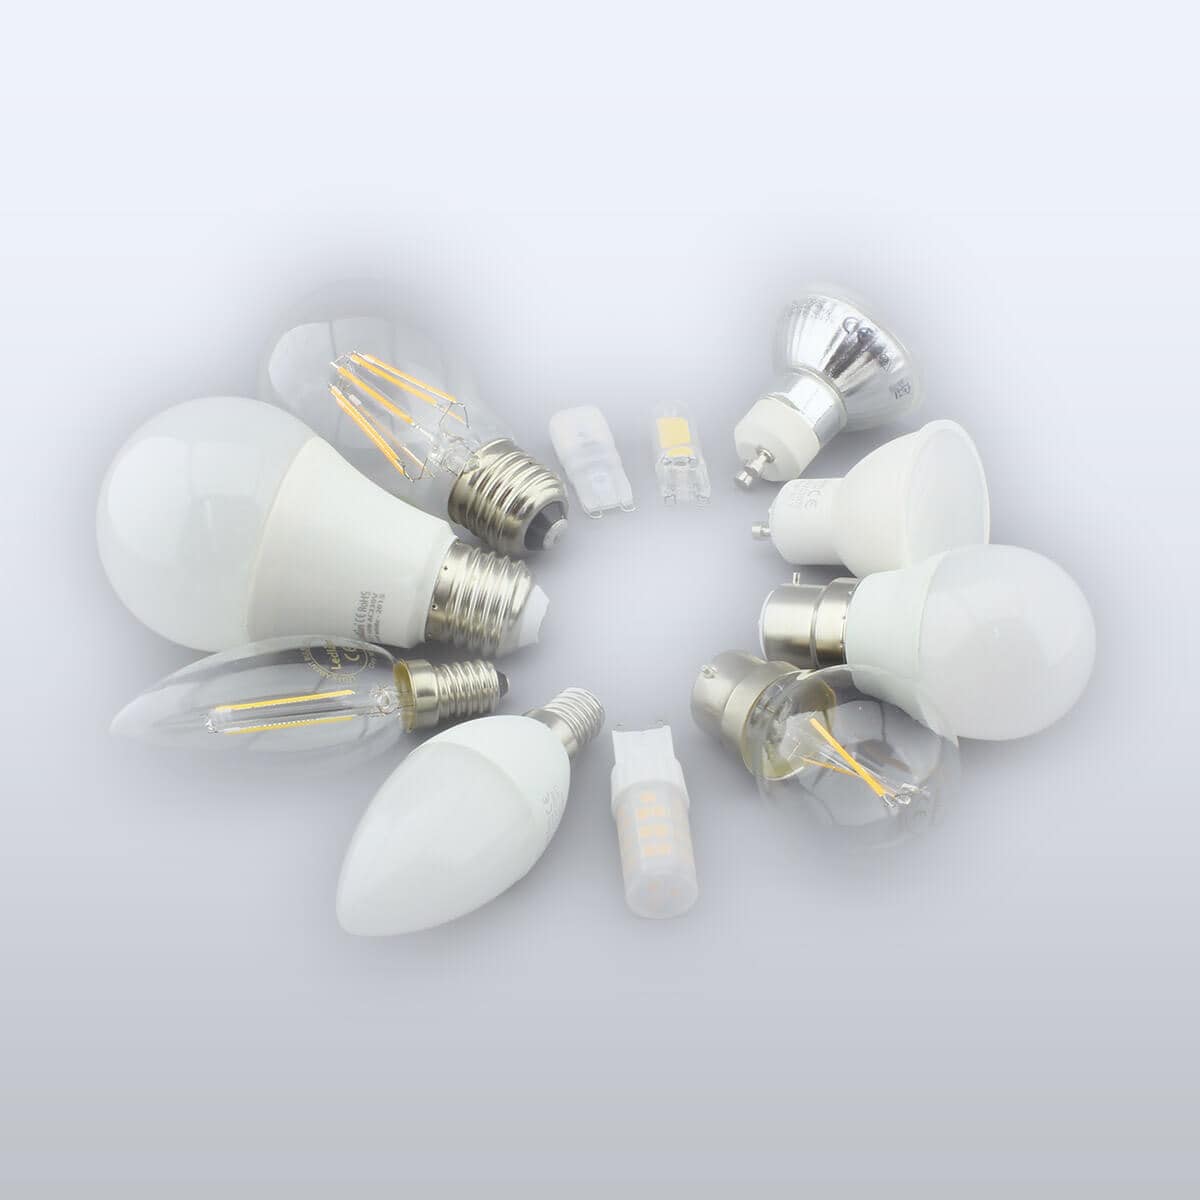 Lamps (Bulbs)